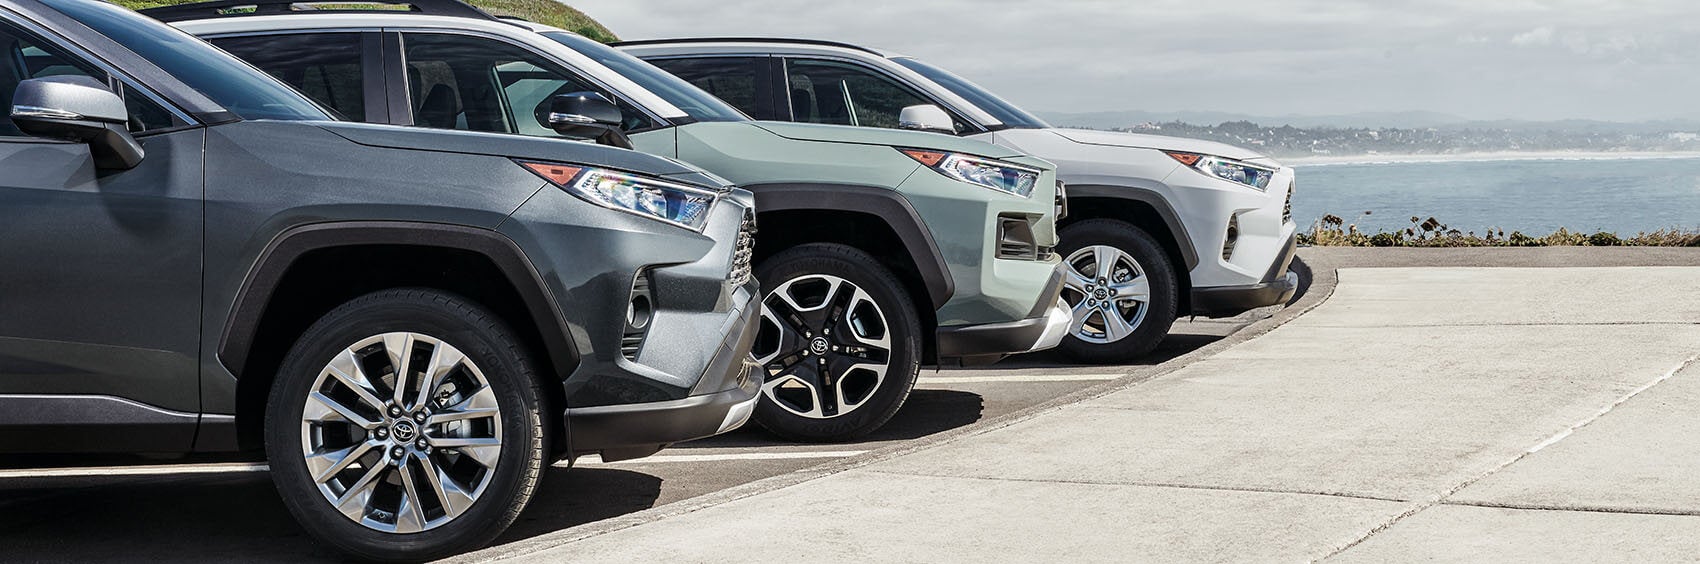 Toyota RAV4 Lease Deals near Clermont FL